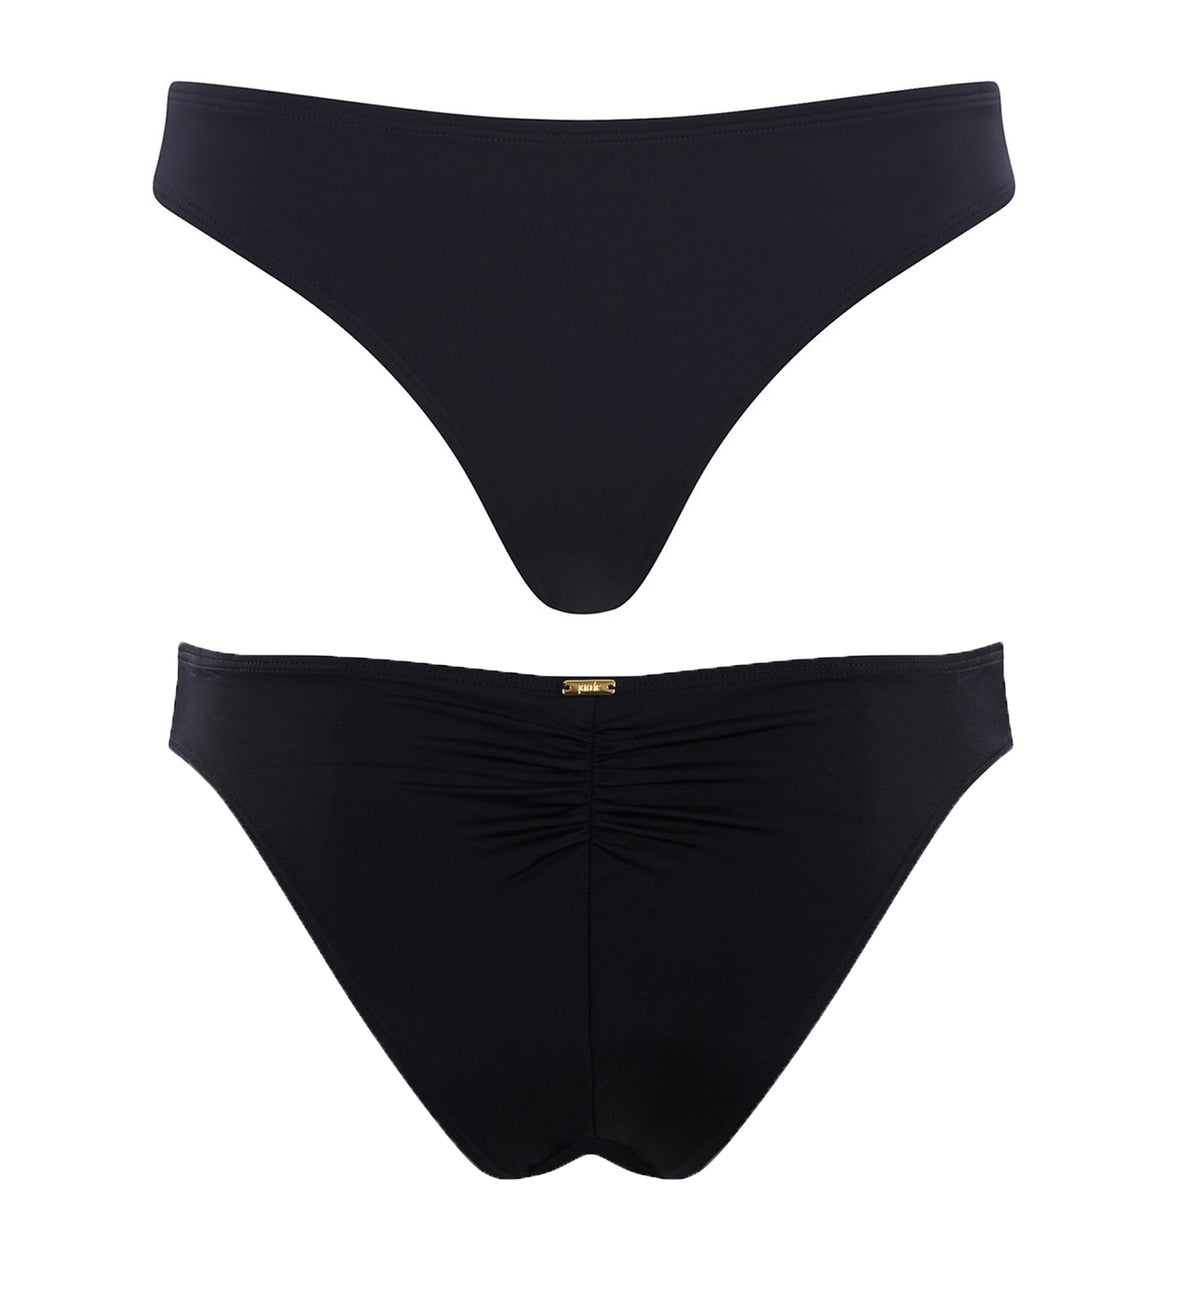 Panache Anya Riva Brazilian Swim Pant (SW1317),XS,Black - Black,XS